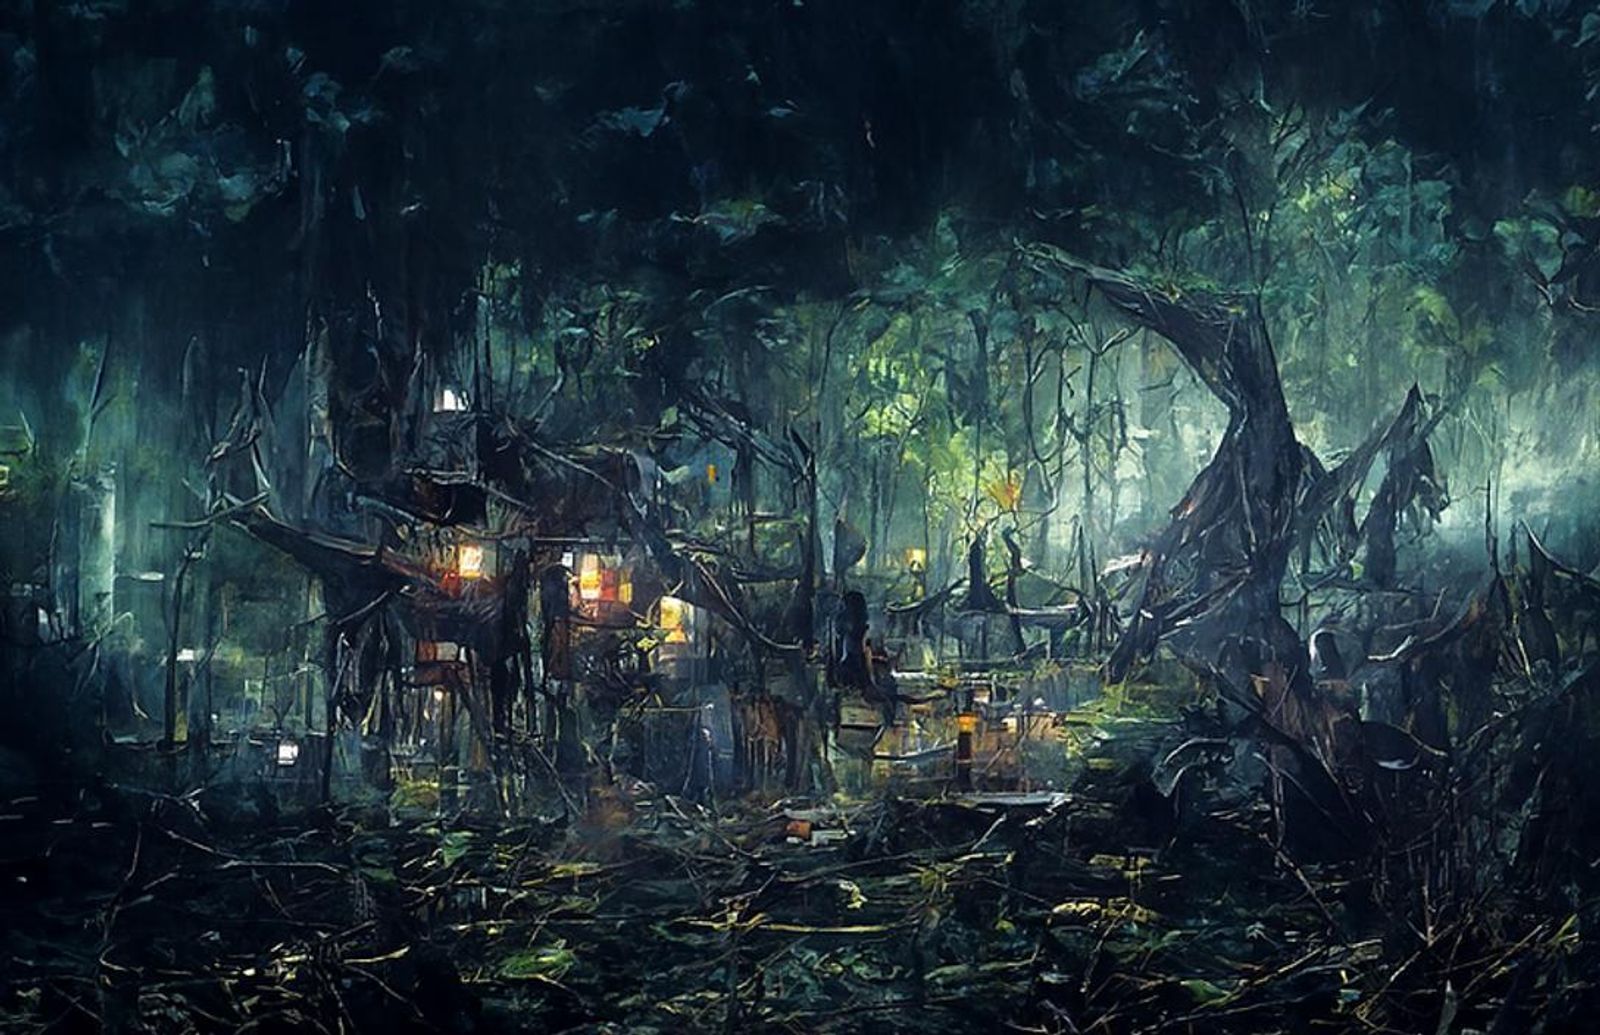 dark swamp painting